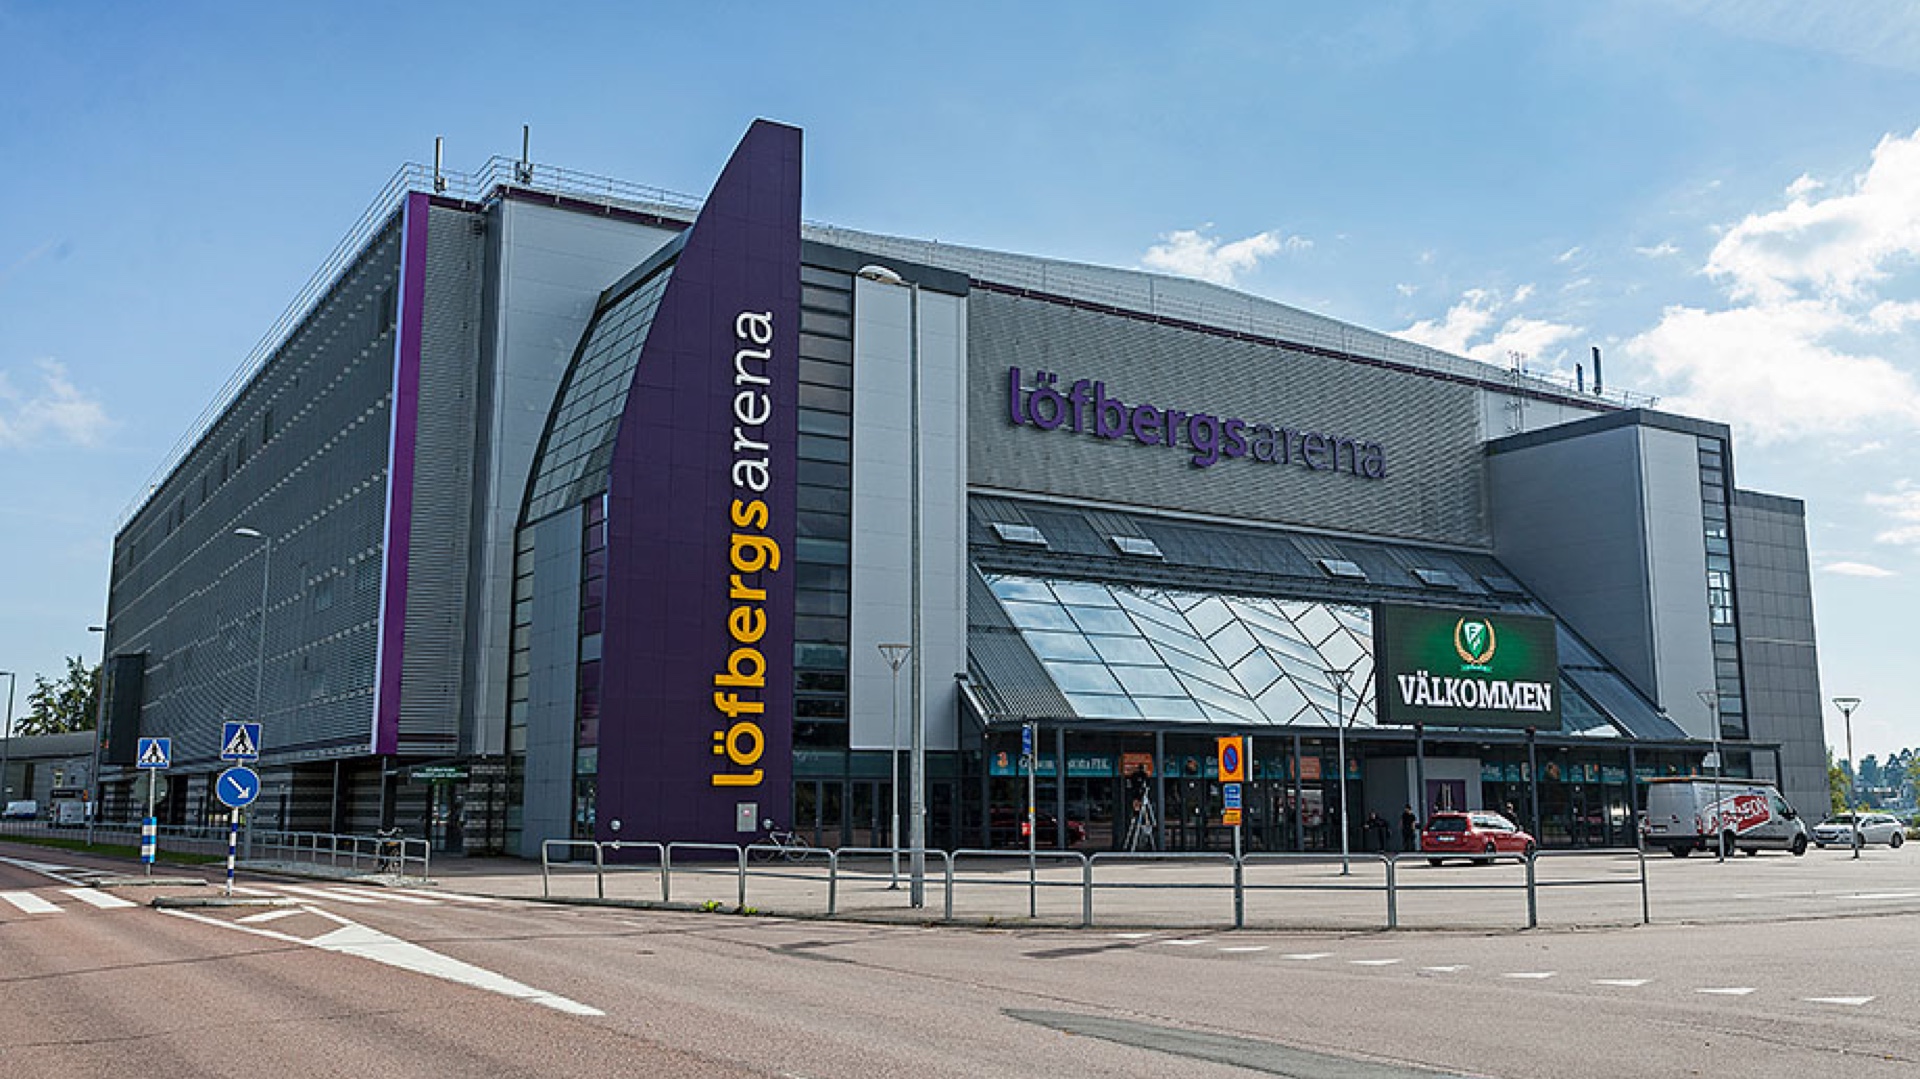 Reference Löfbergs arena